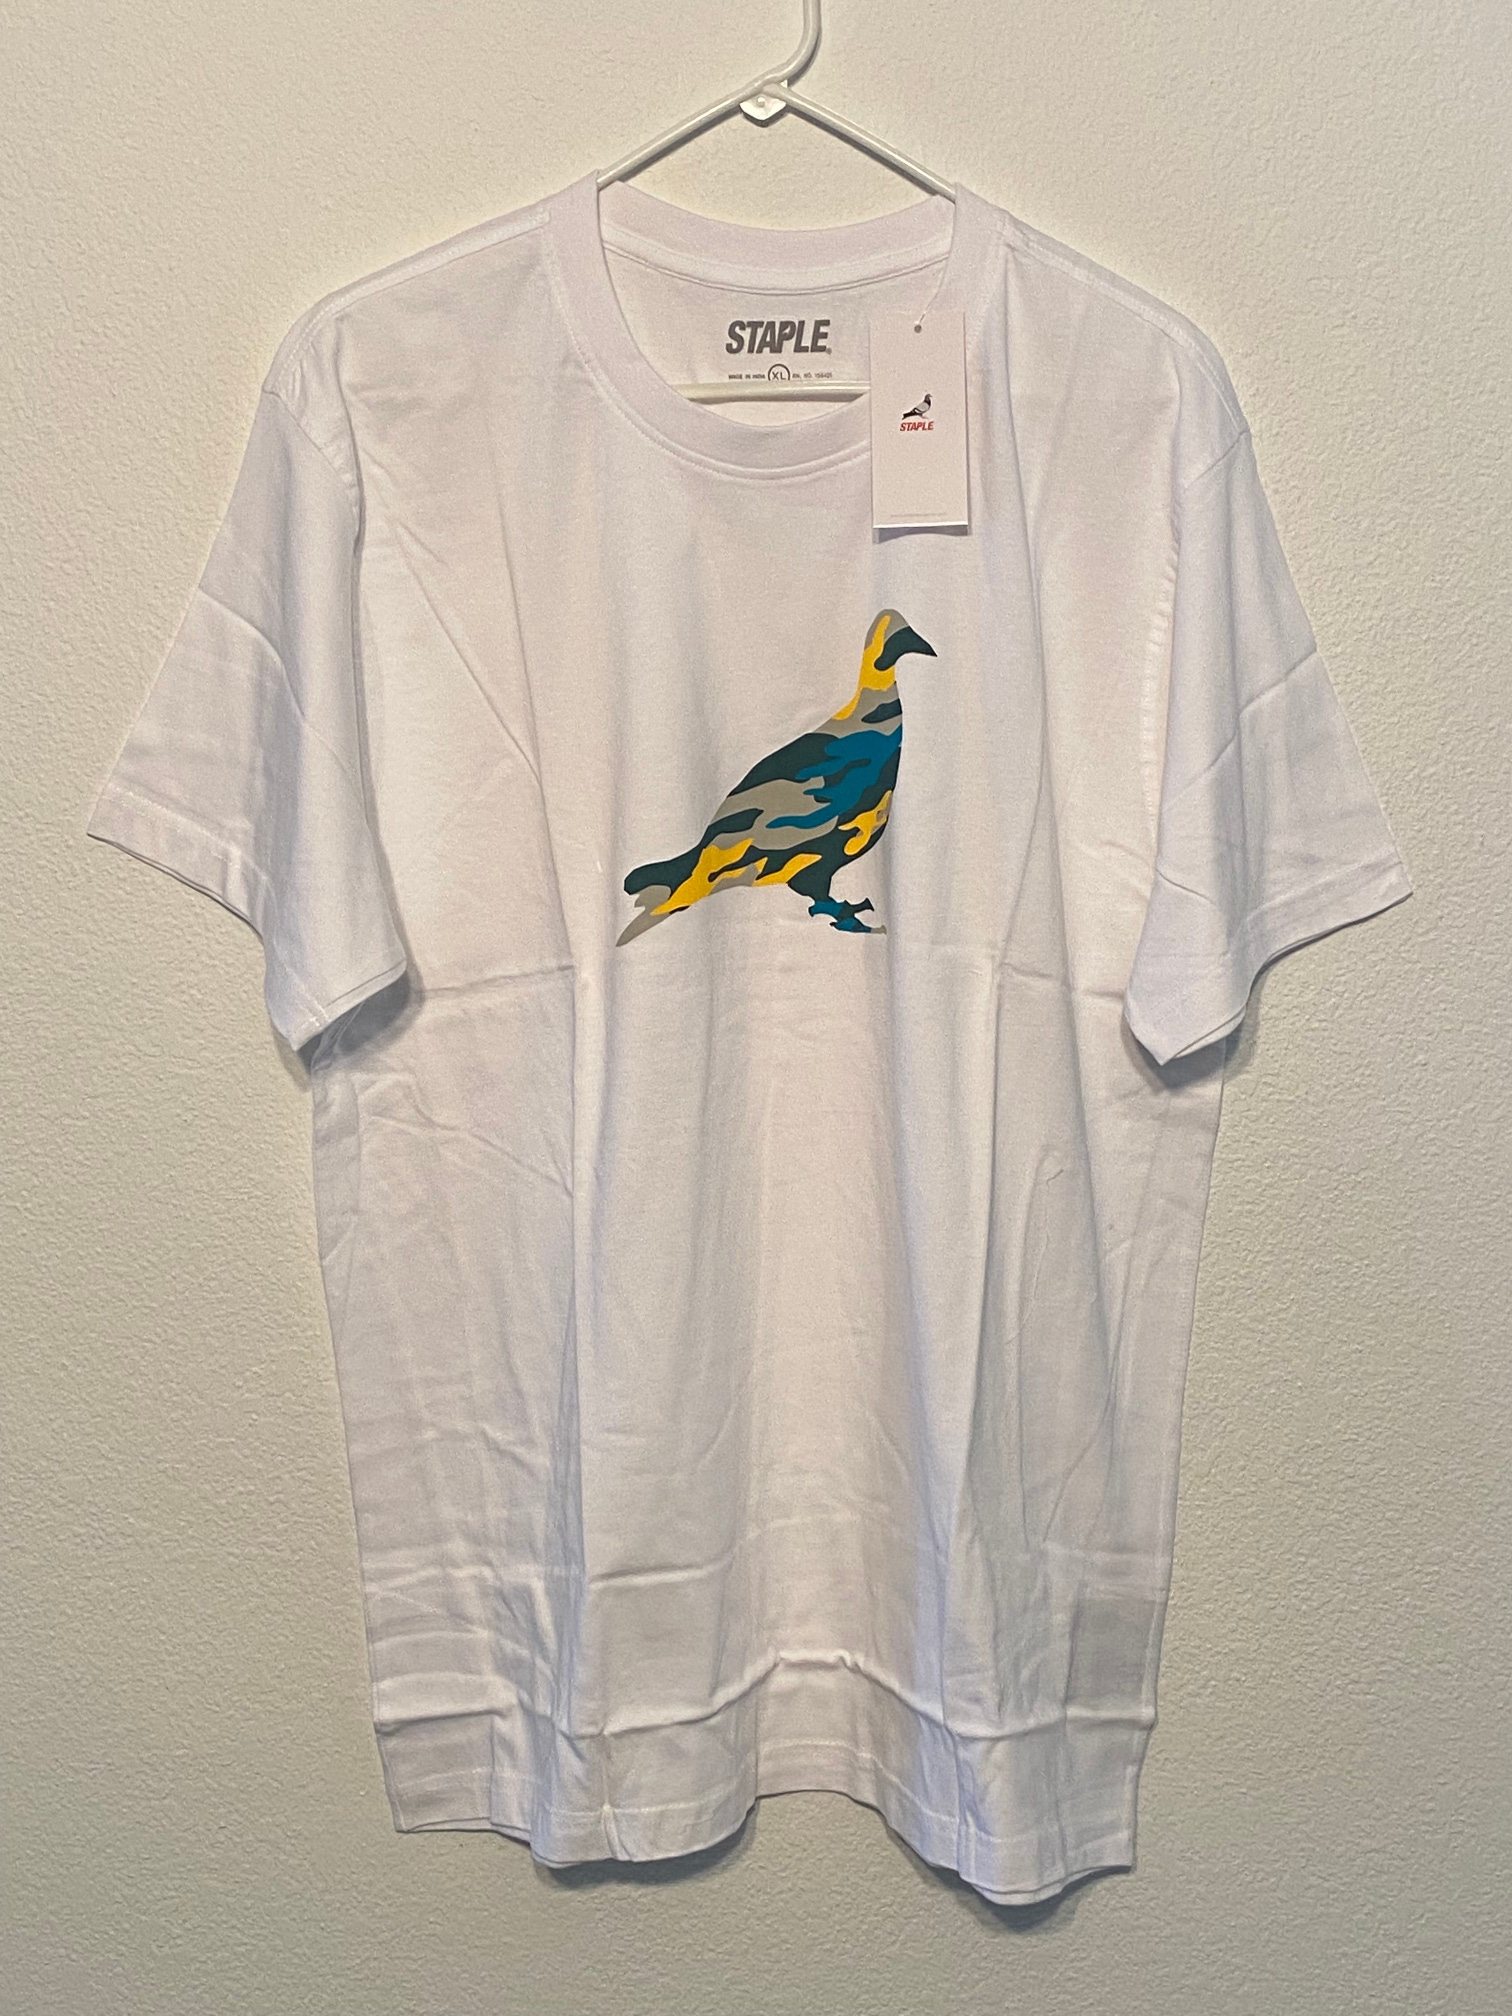 Staple Pigeon NYC Underhill Camo Logo Size XL Casual Skateboarding T Shirt New